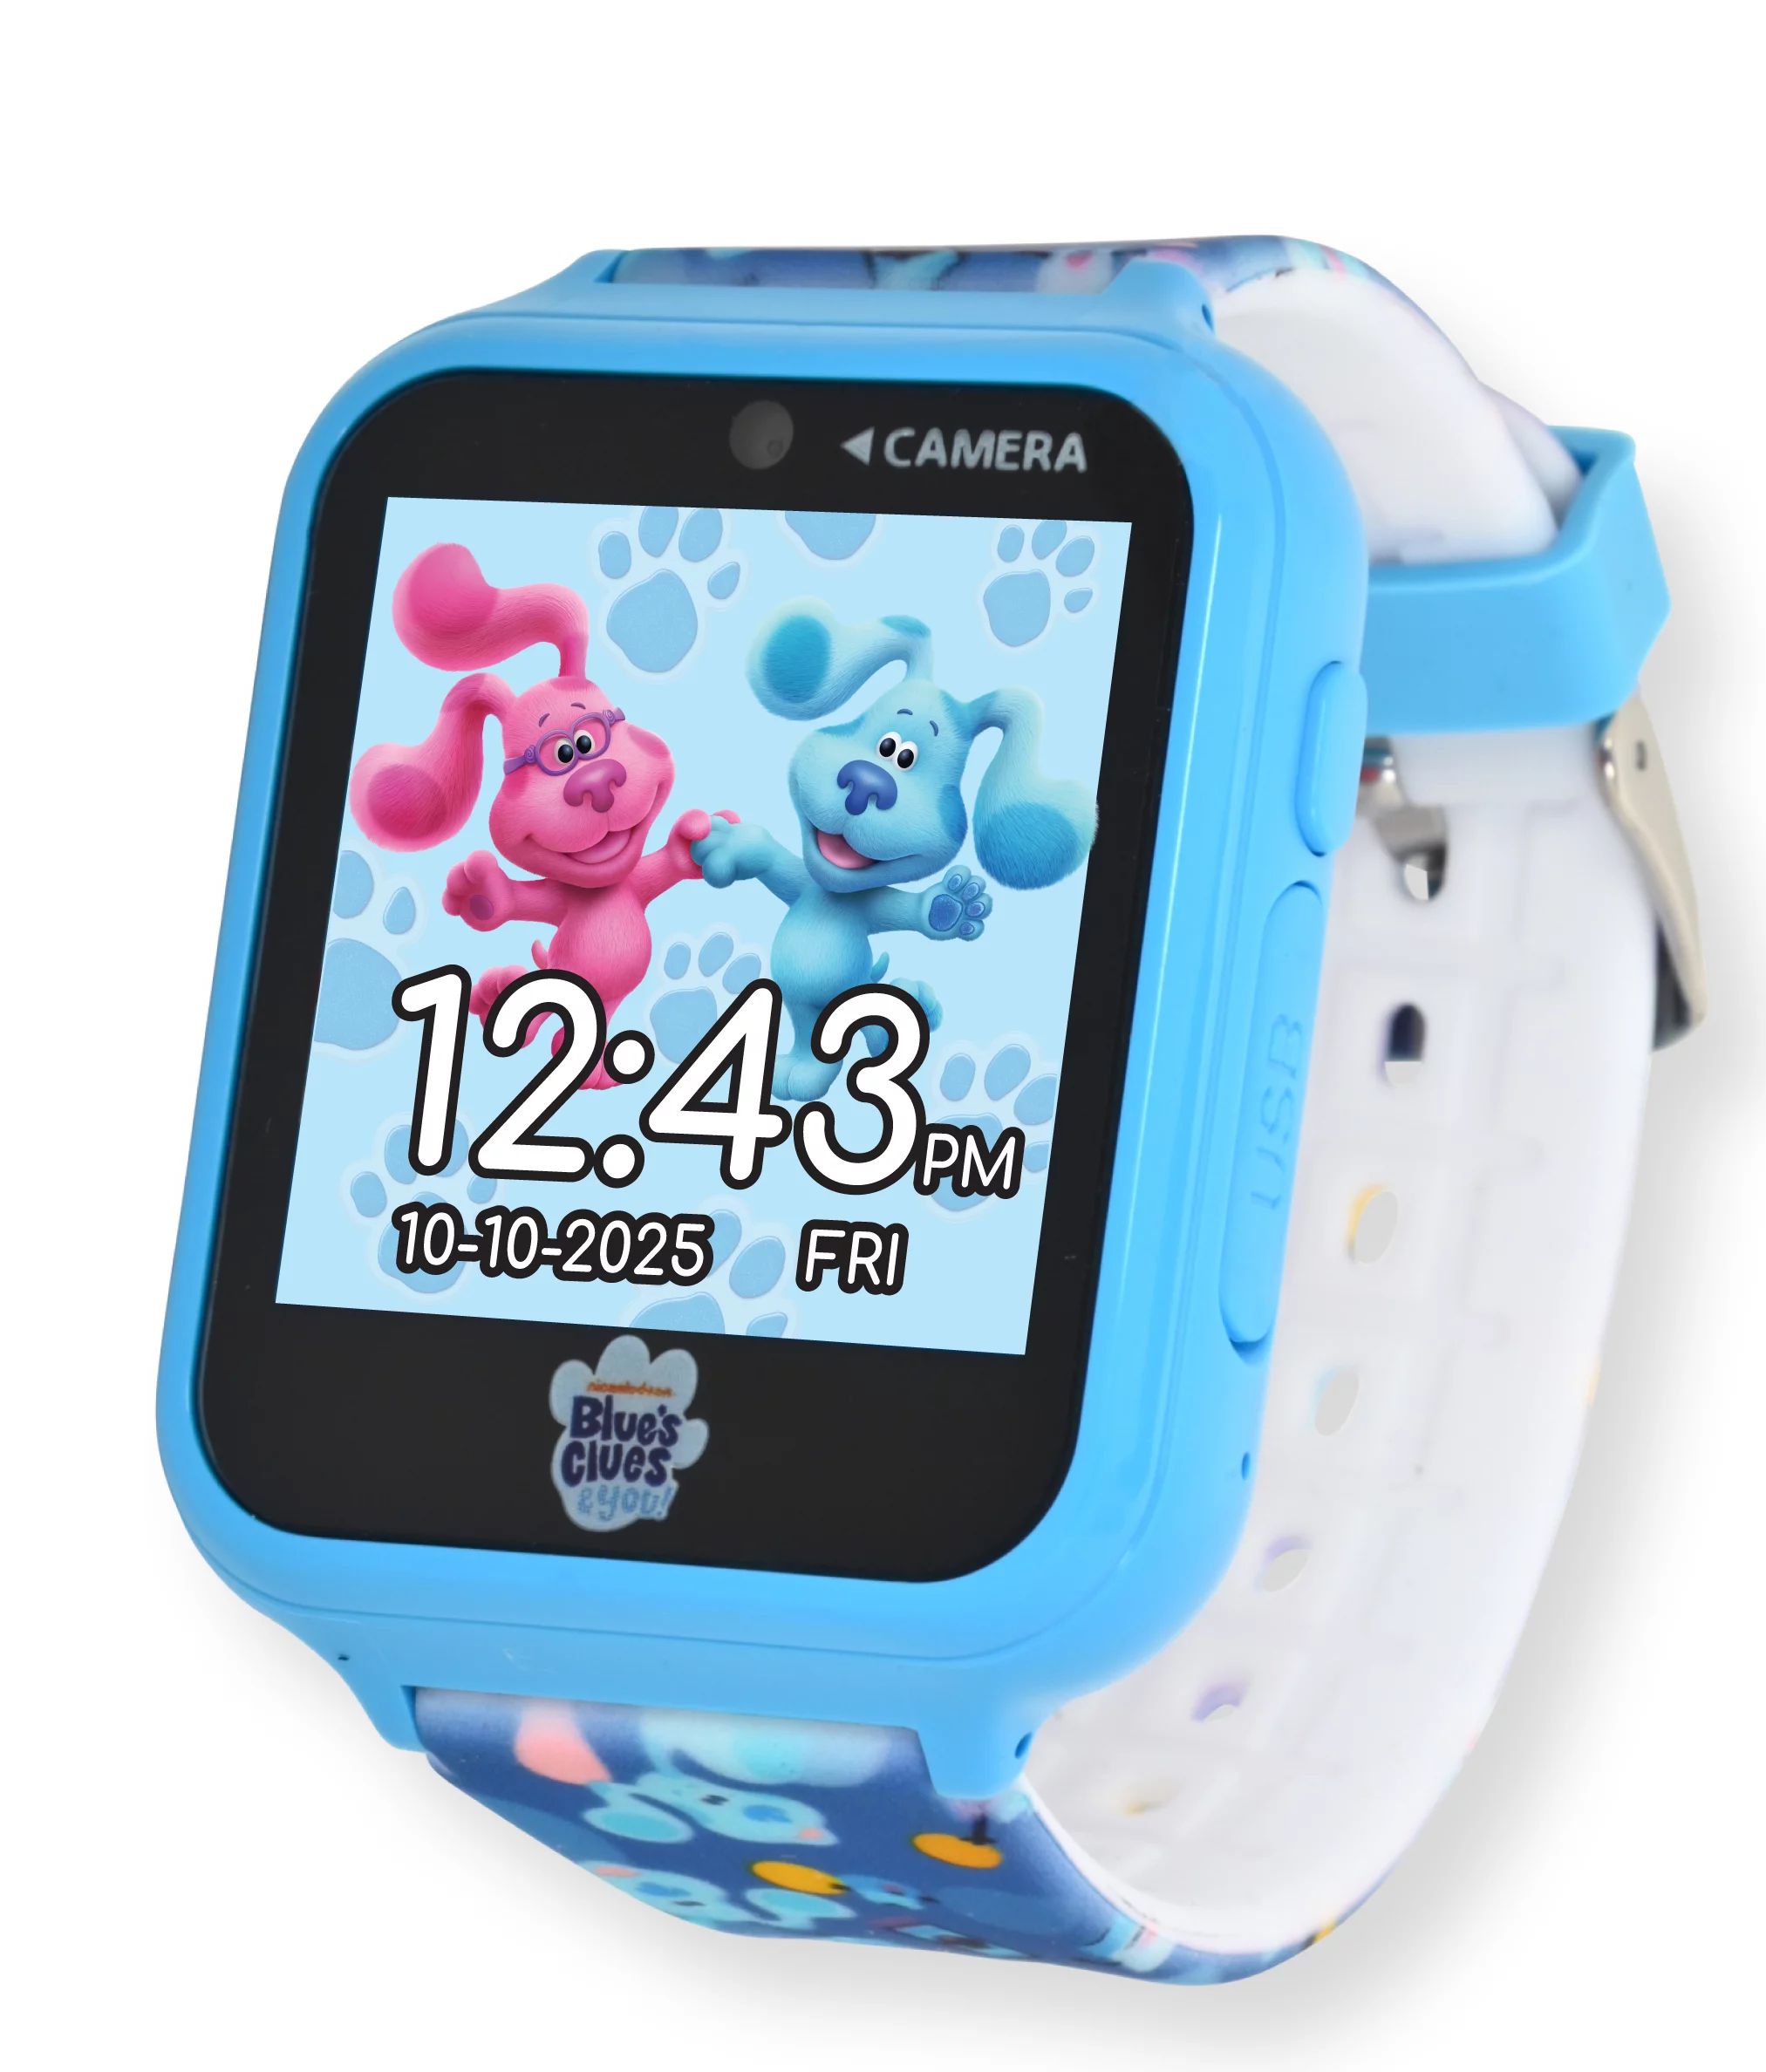 Nickelodeon Blue's Clues Unisex Child iTime Interactive Smartwatch 40mm in Blue - BLU4023WMC | Walmart (US)